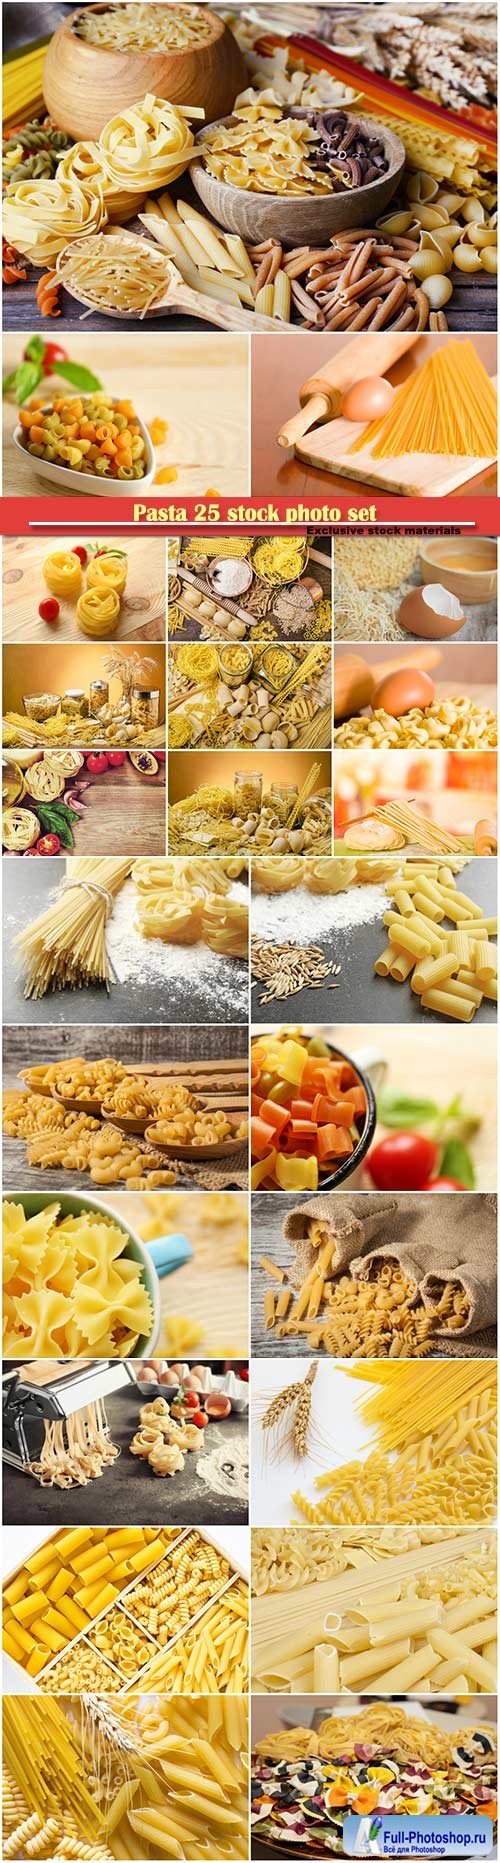 Pasta 25 stock photo set